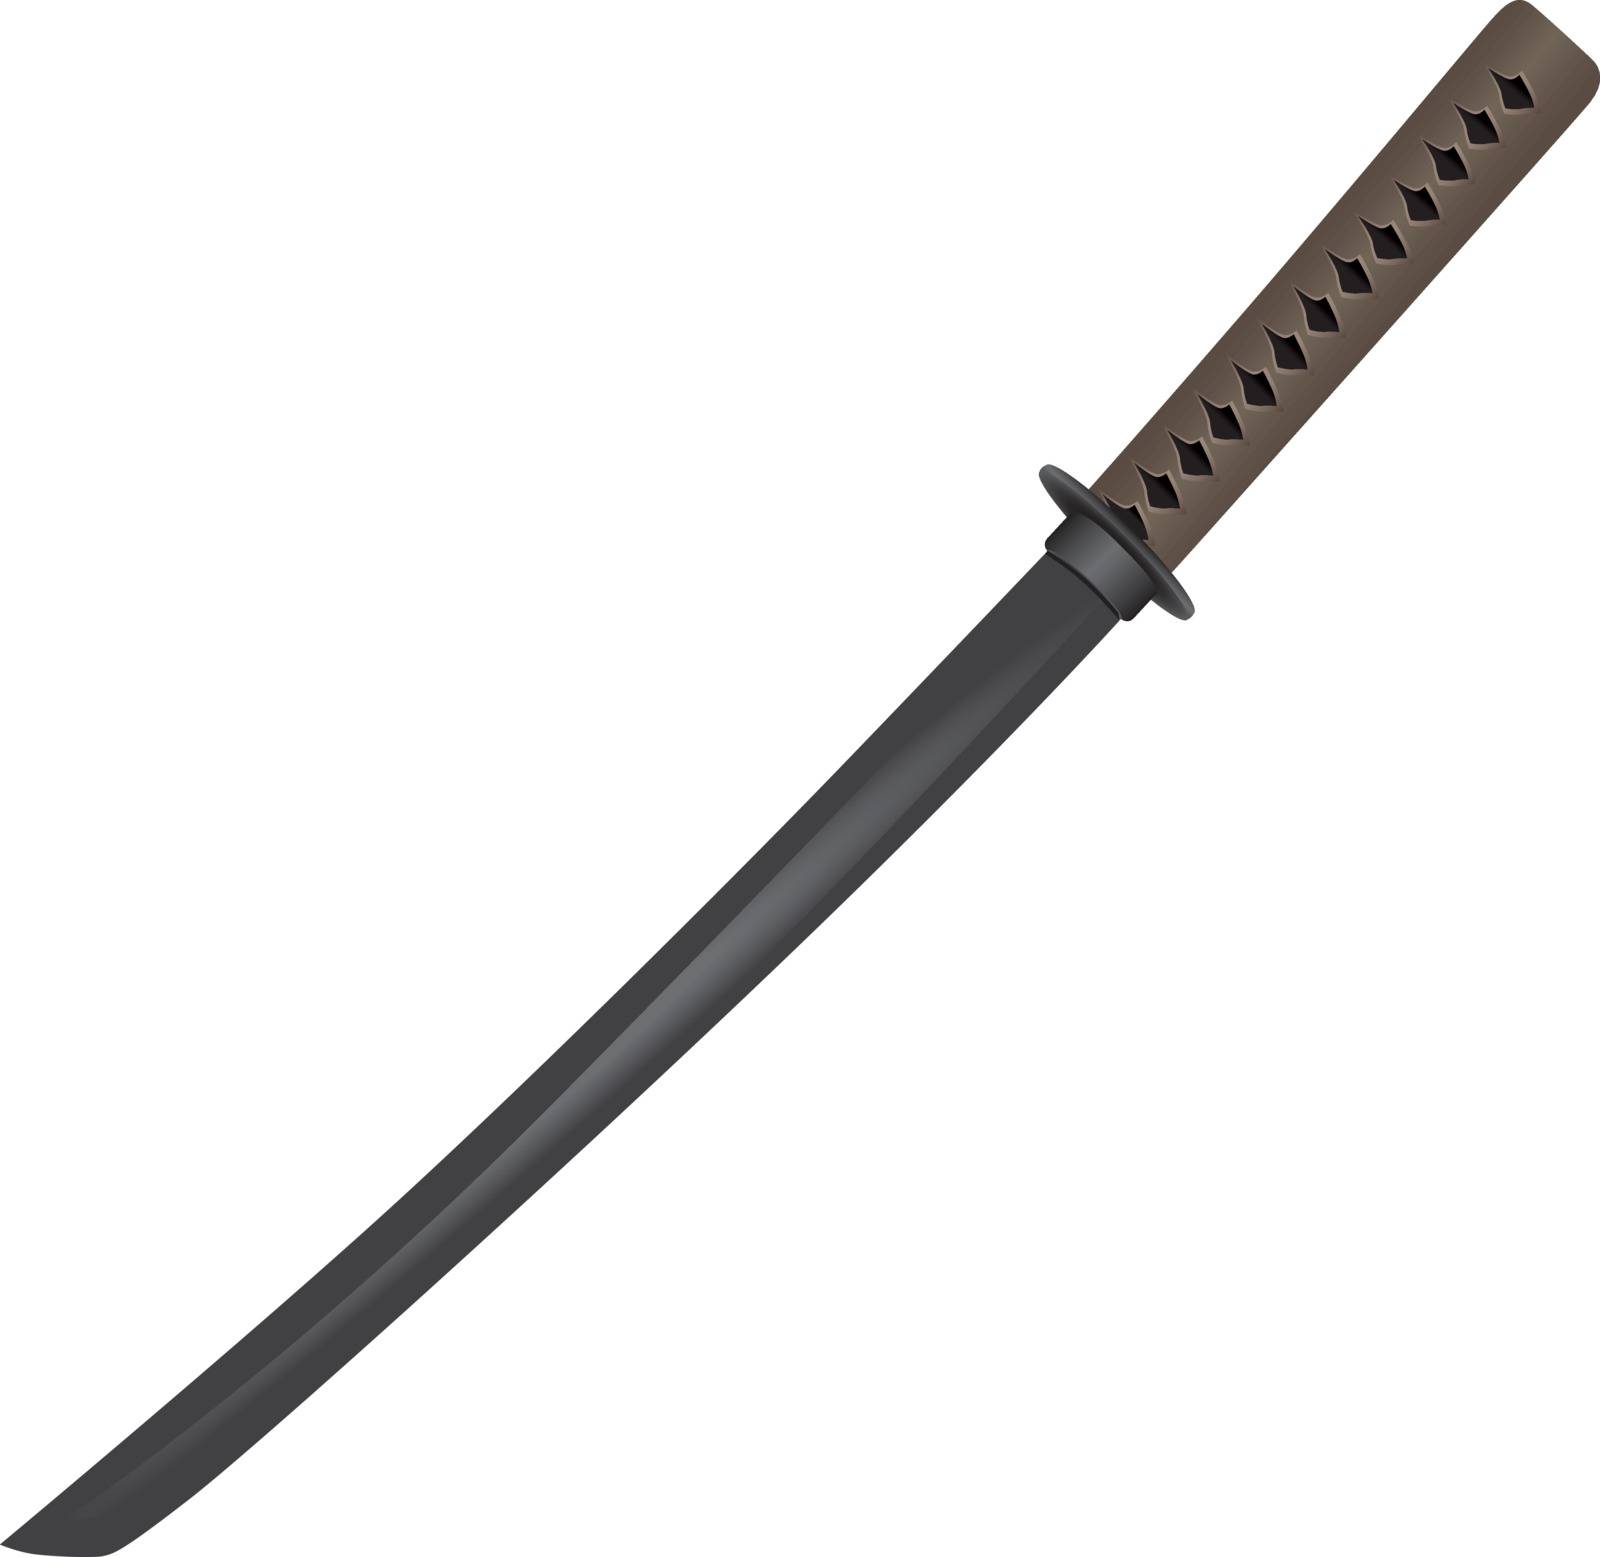 Bokken - Wooden traditional swordt by VIPDesignUSA